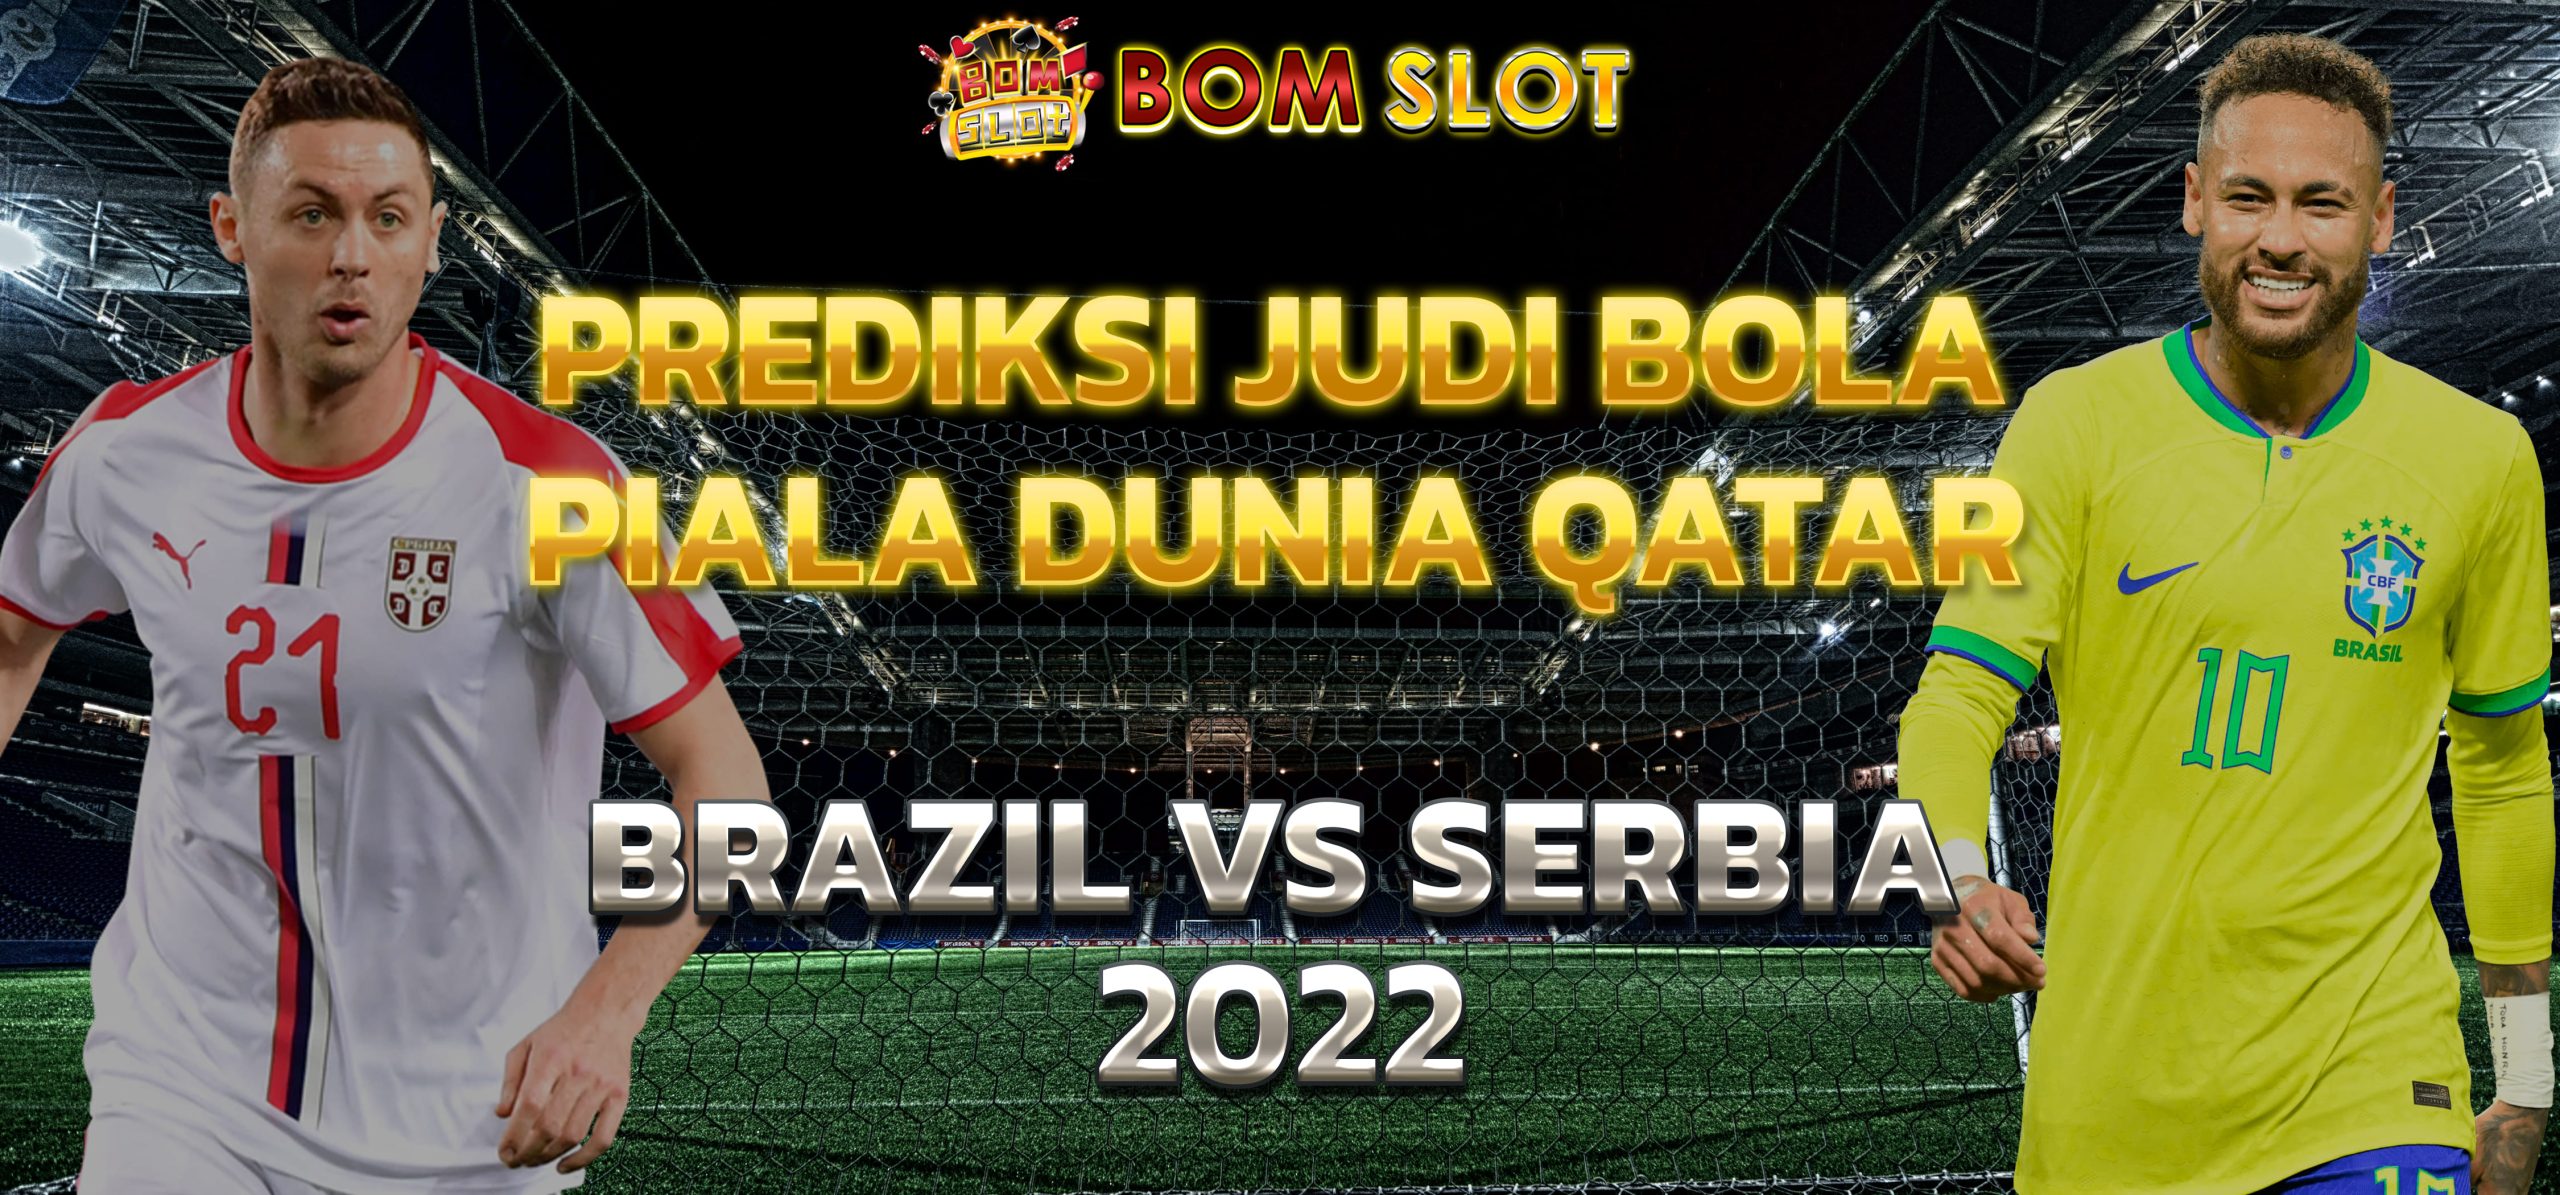 Prediksi Judi Bola Piala Dunia Qatar Brasil vs Serbia 2022